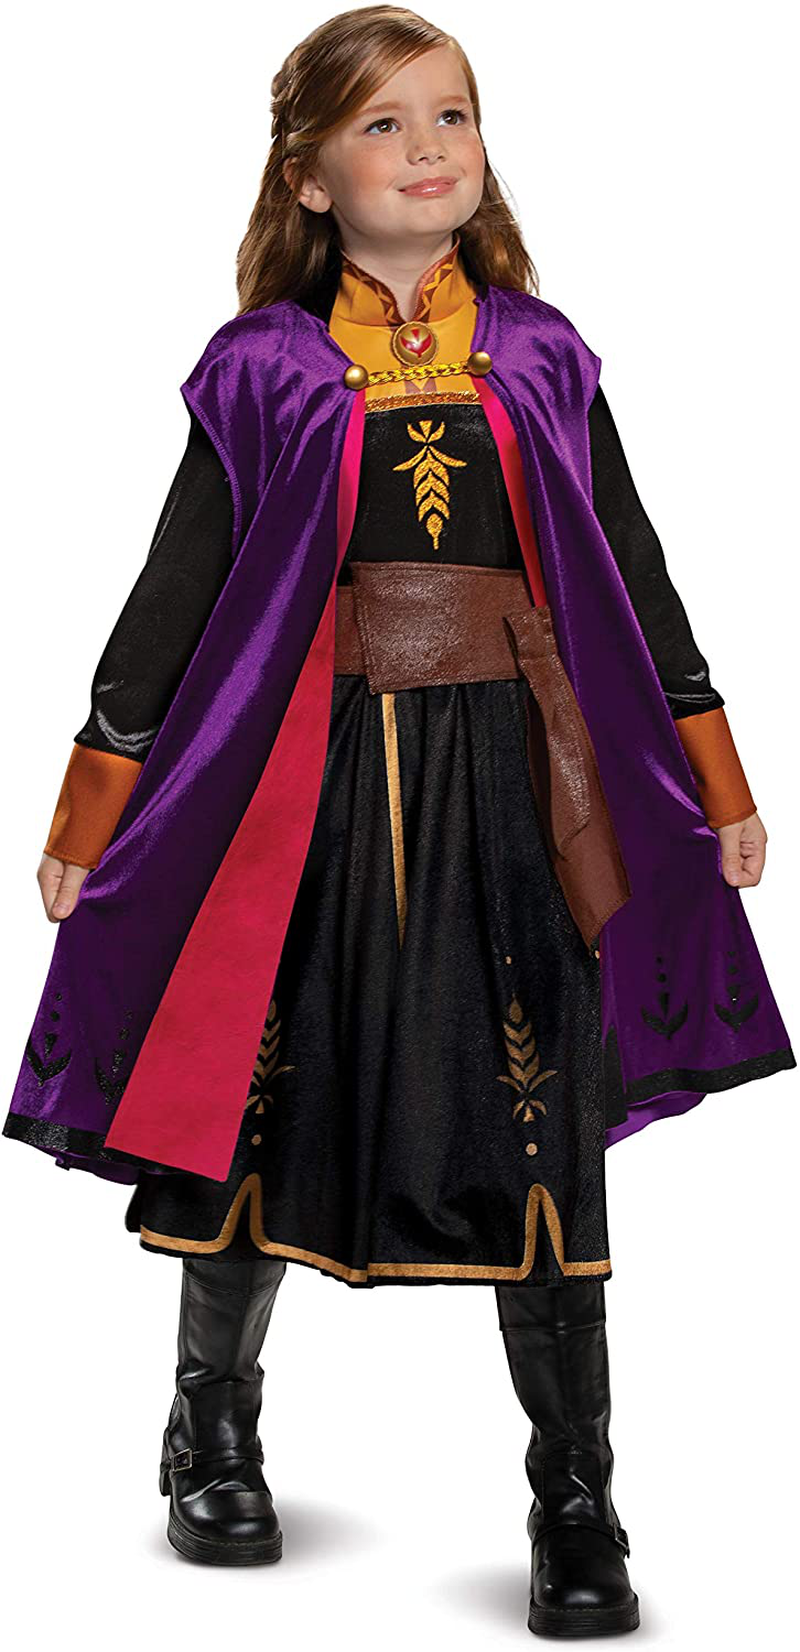 Disguise Disney Anna Frozen 2 Deluxe Girls' Halloween Costume Purple, 3T-4T Apparel & Accessories > Costumes & Accessories > Costumes Disguise 3T-4T  